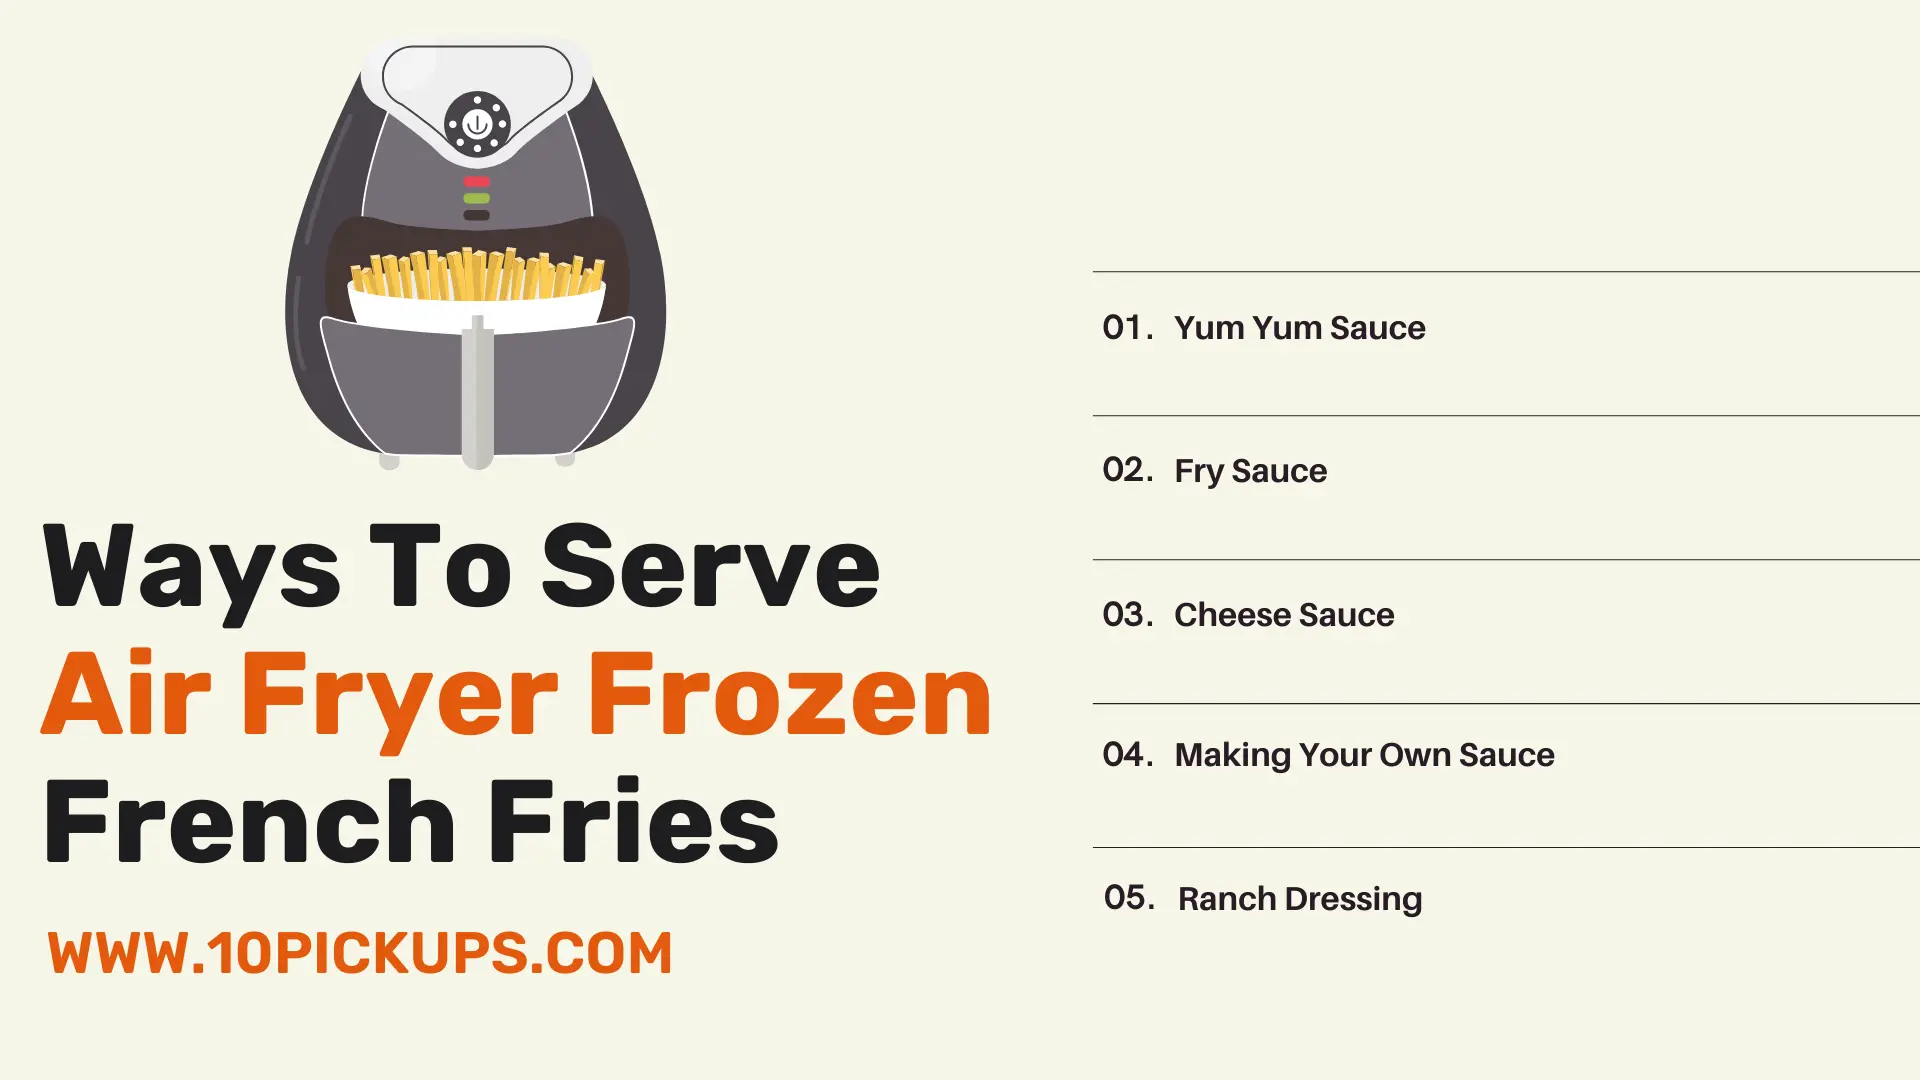 Ways To Serve Air Fryer Frozen French Fries